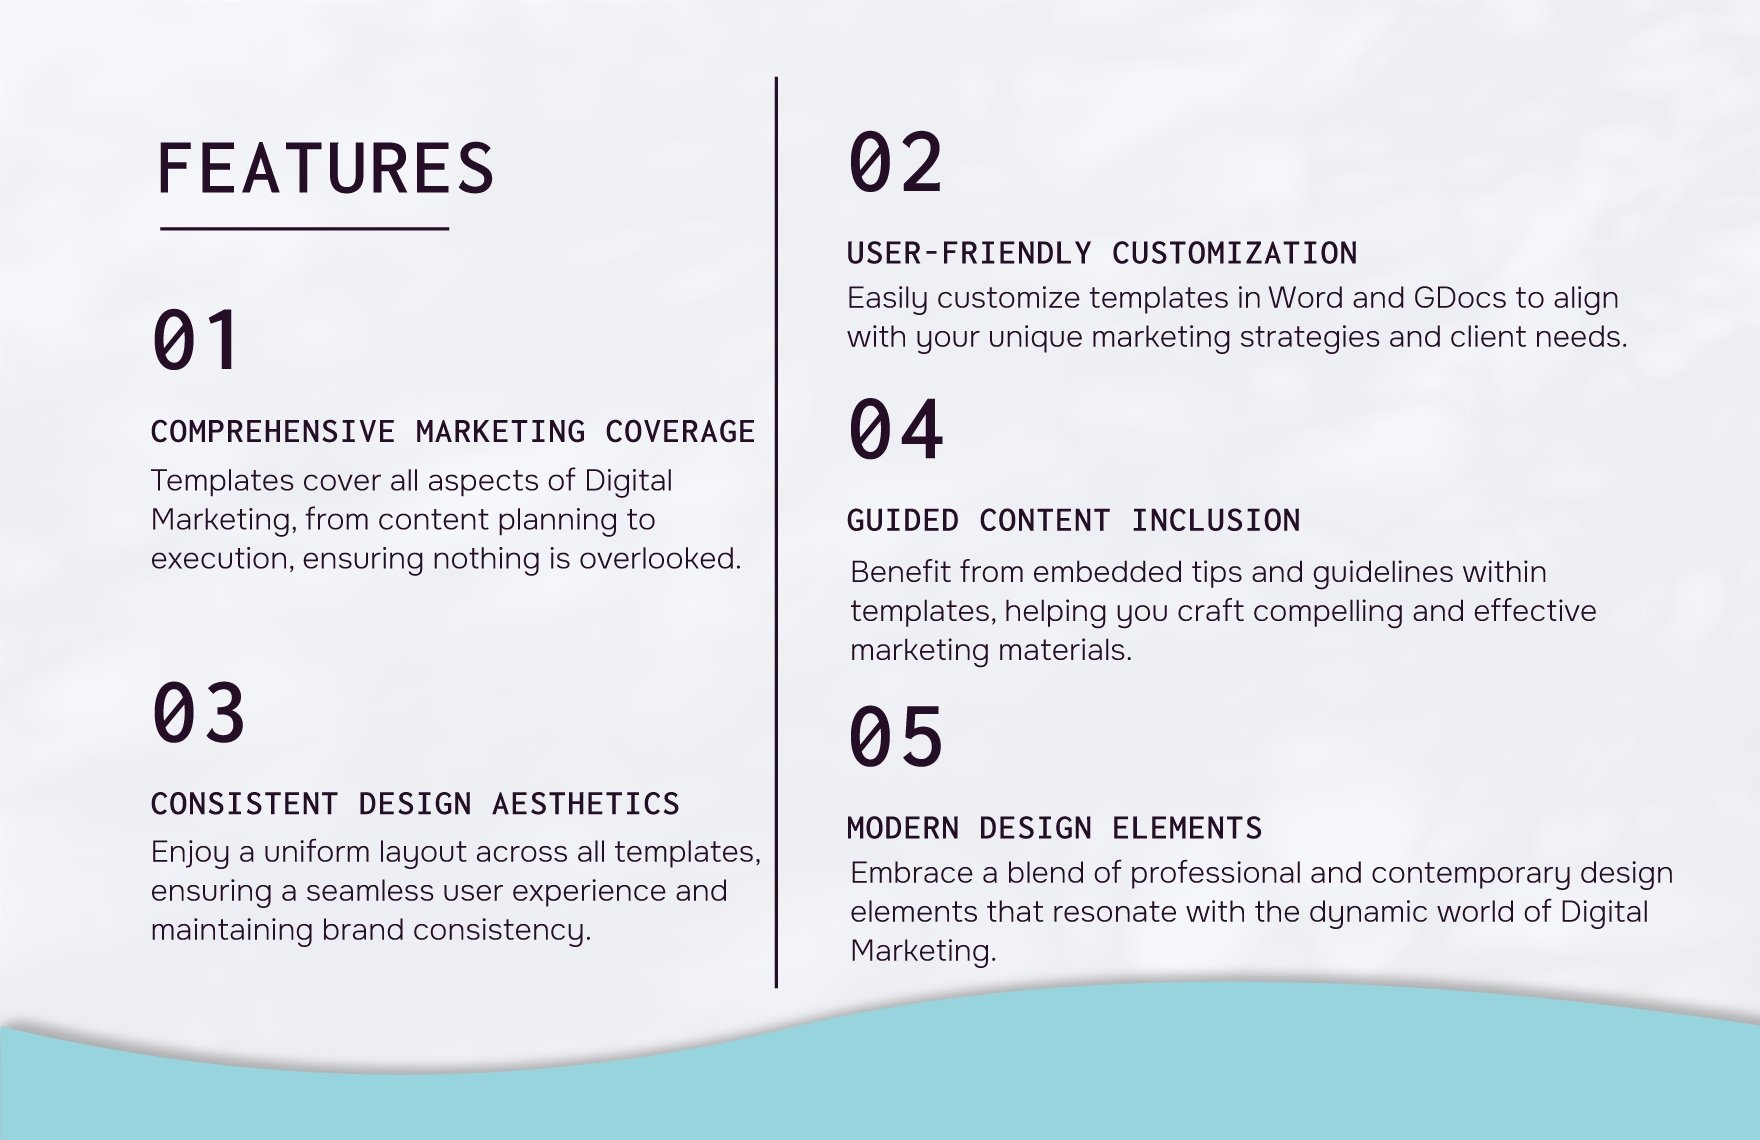 Digital Marketing Agency Website Content Planning Worksheet Template